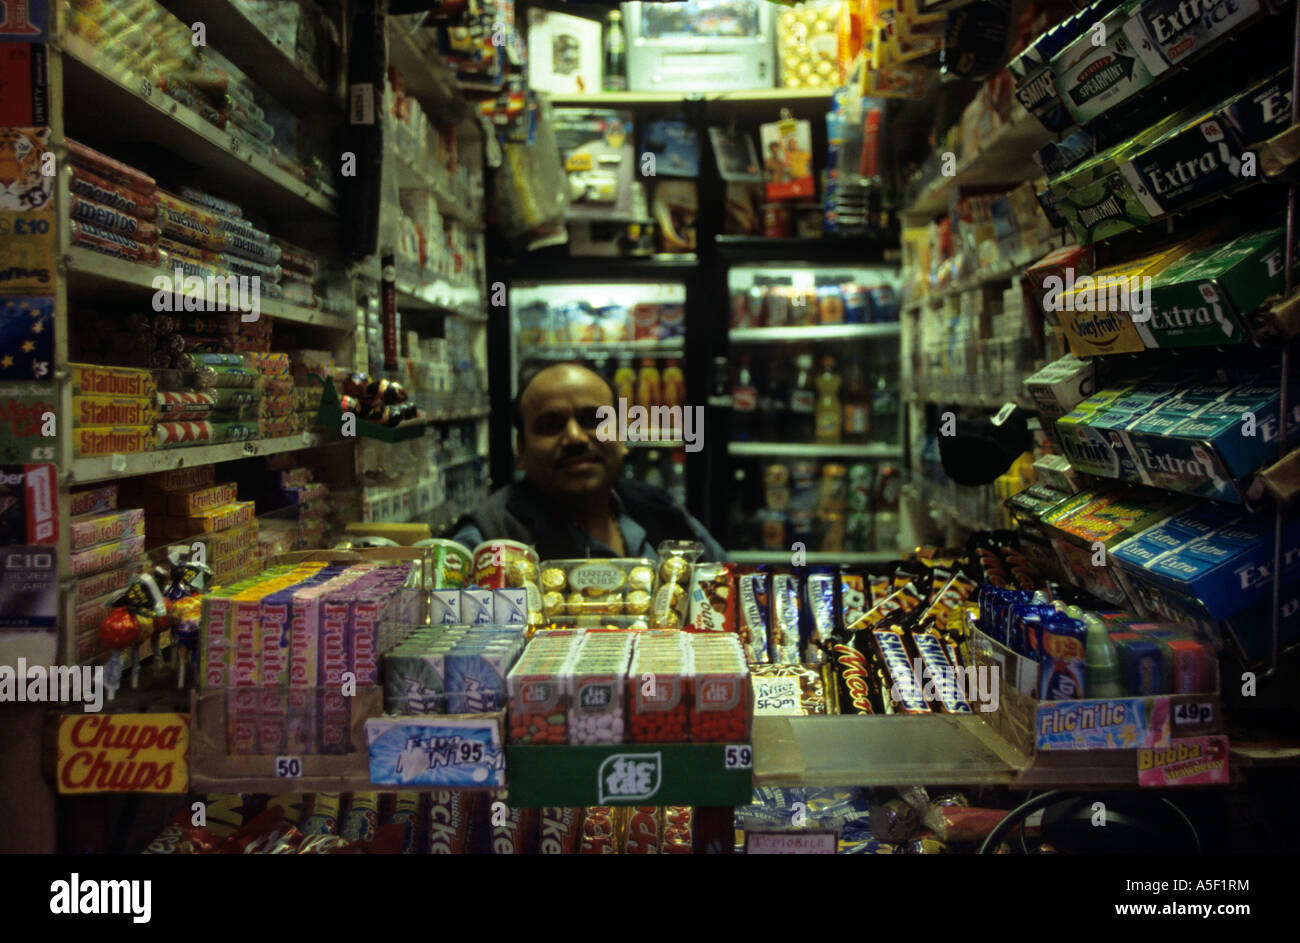 Snacks vendor, London, England, UK Stock Photo